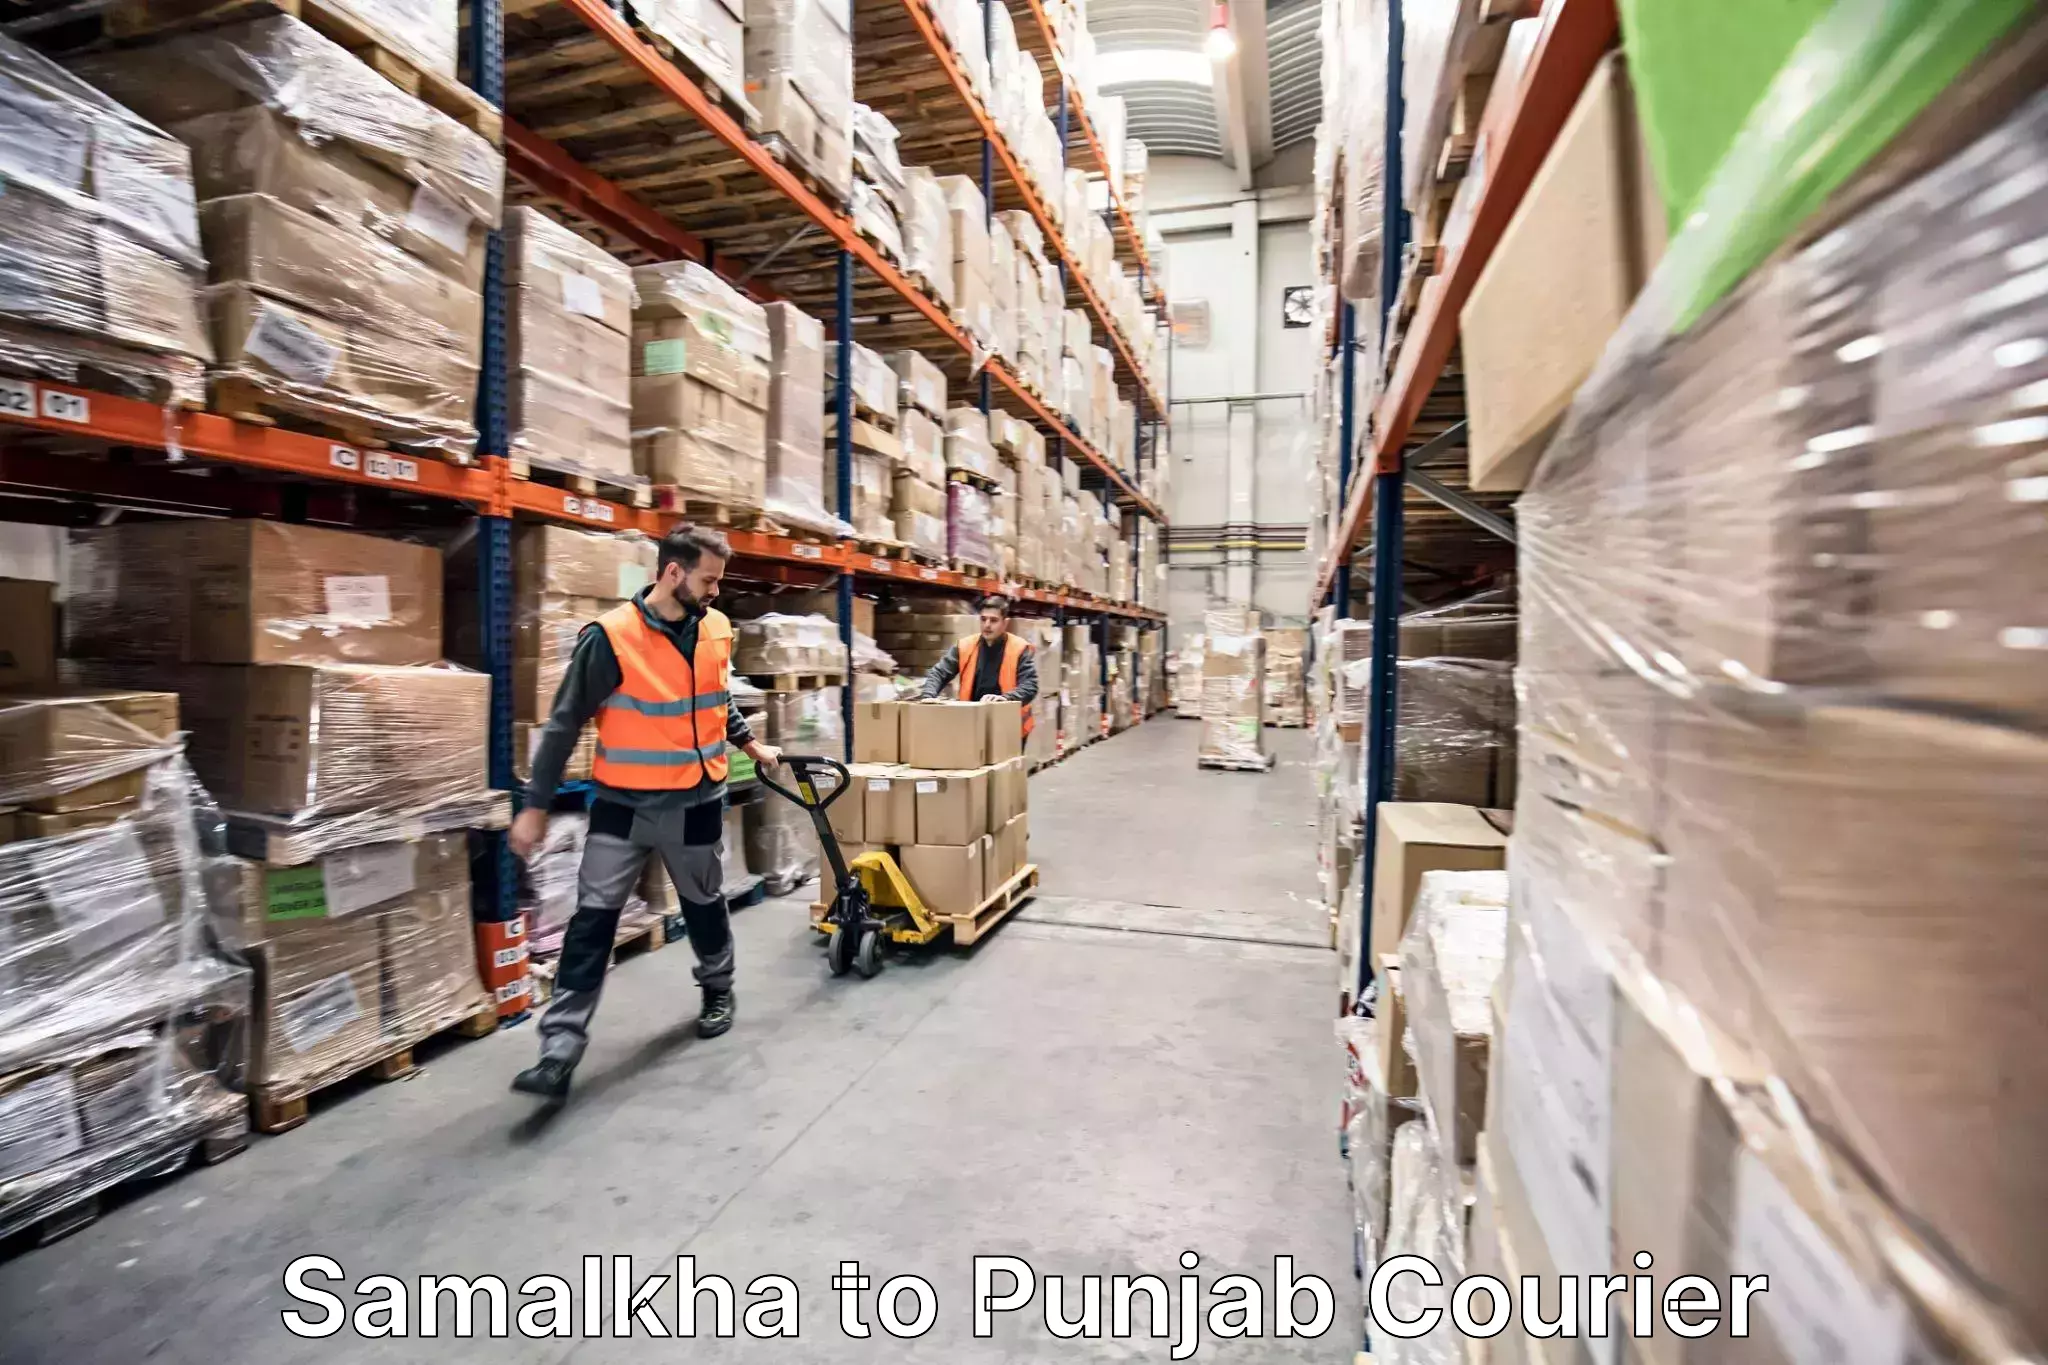 Furniture delivery service Samalkha to Zirakpur